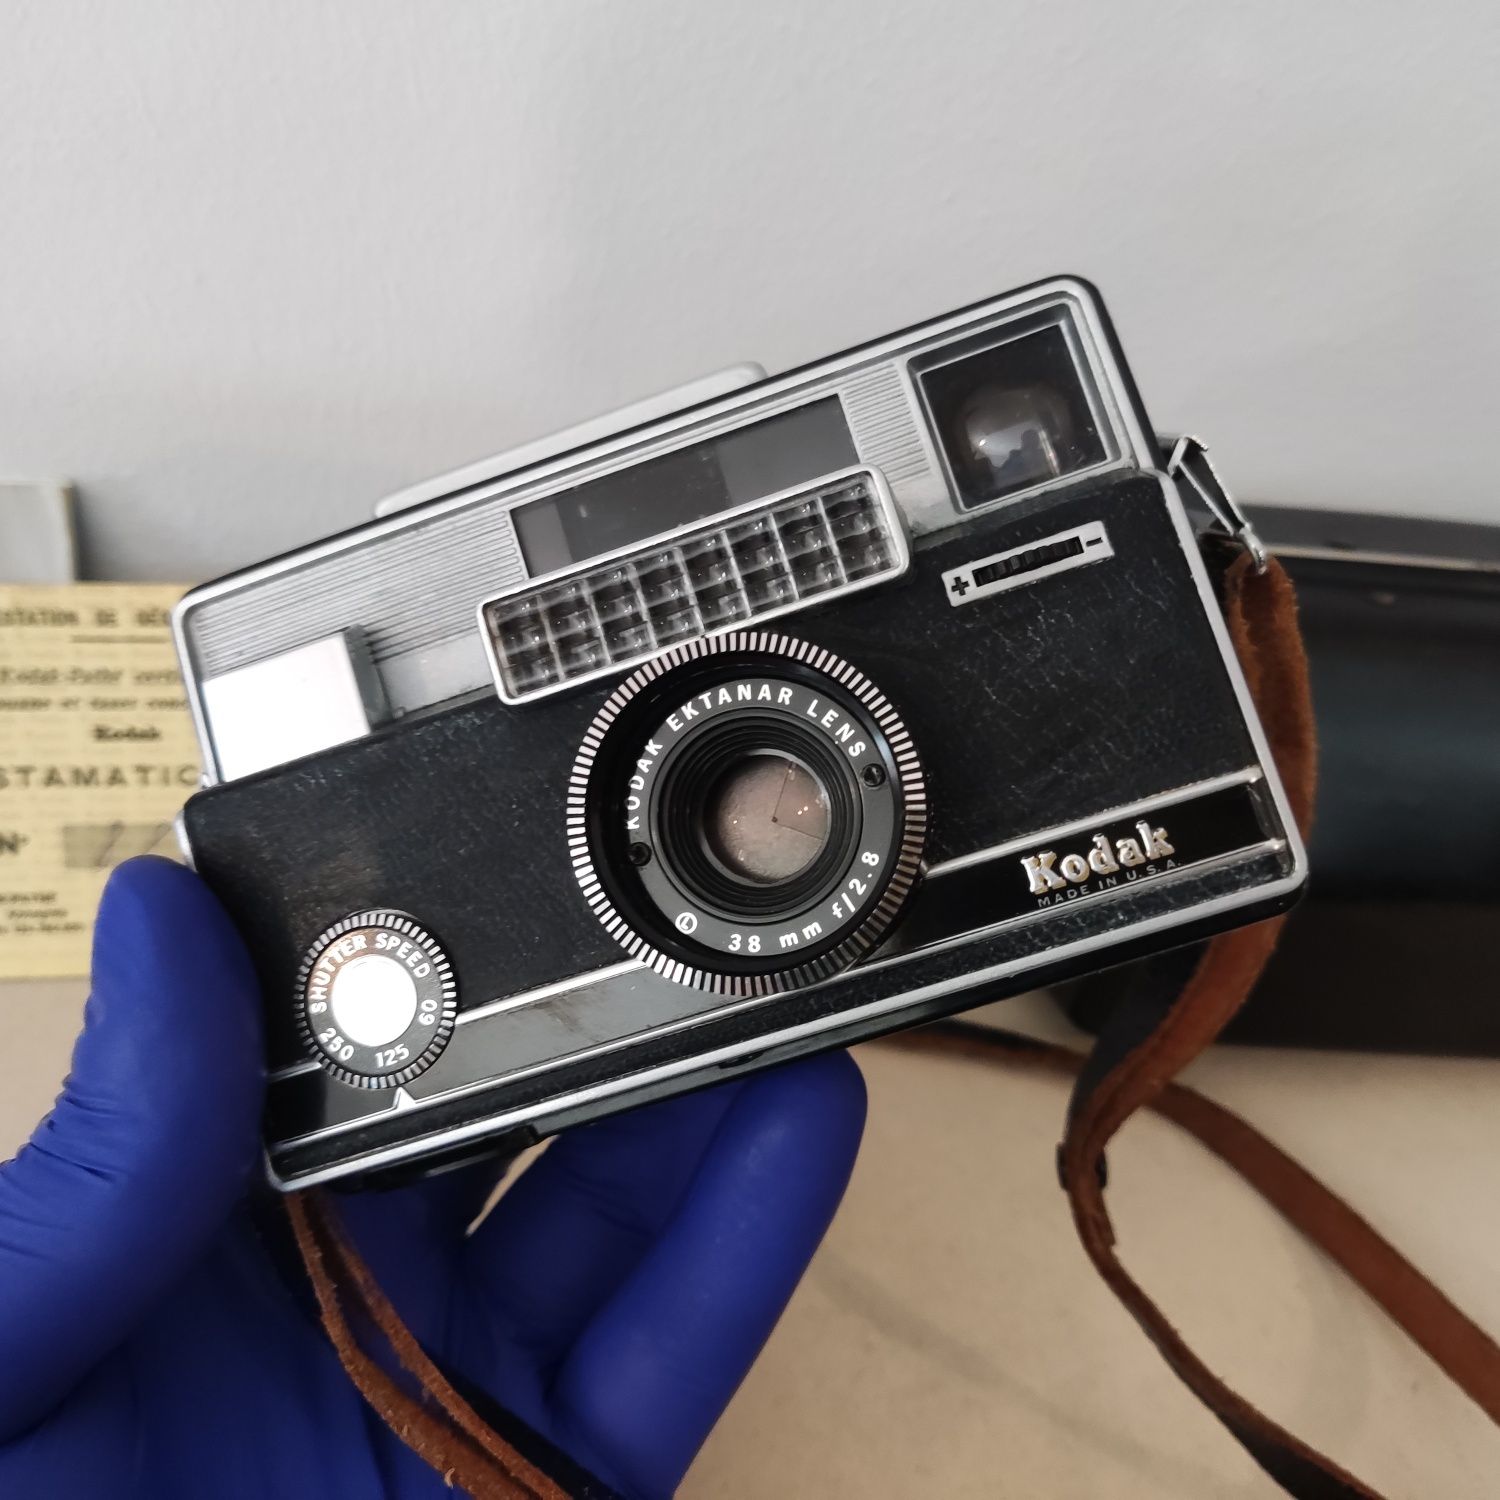 Máquina fotográfica antiga Kodak Instamatic 800